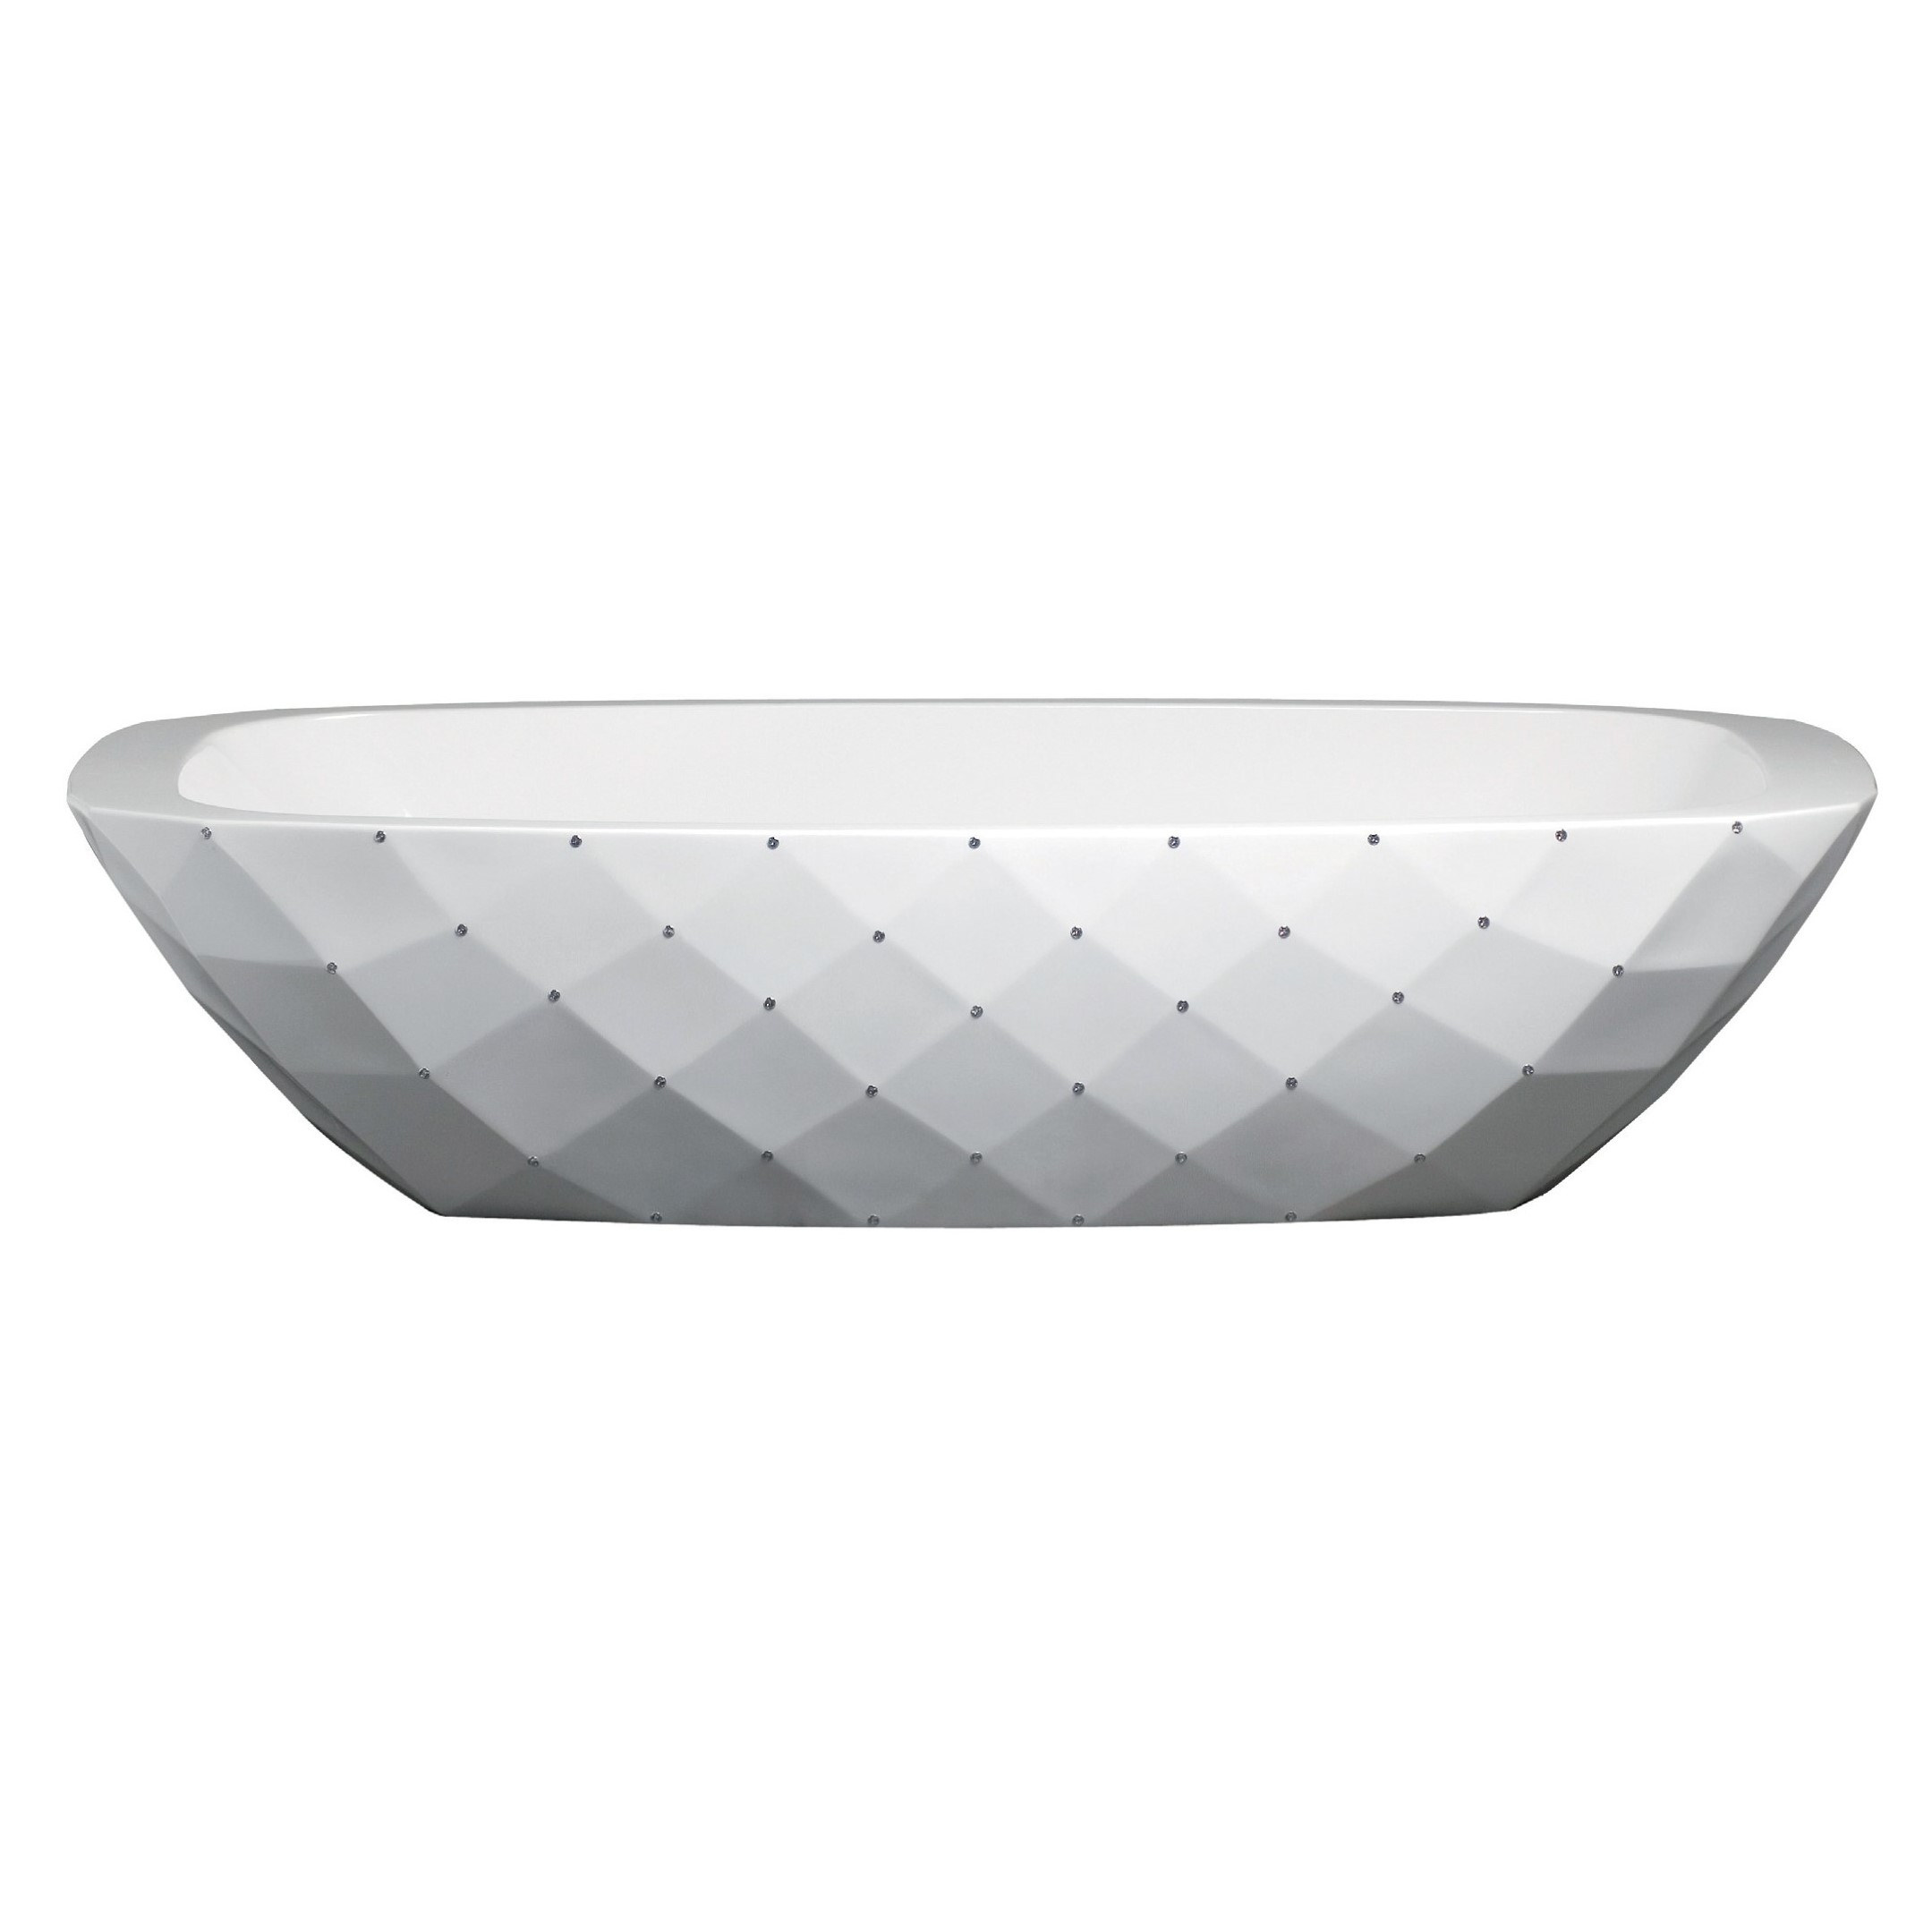 Diamond Glossy White Bathtub by Aquadesign